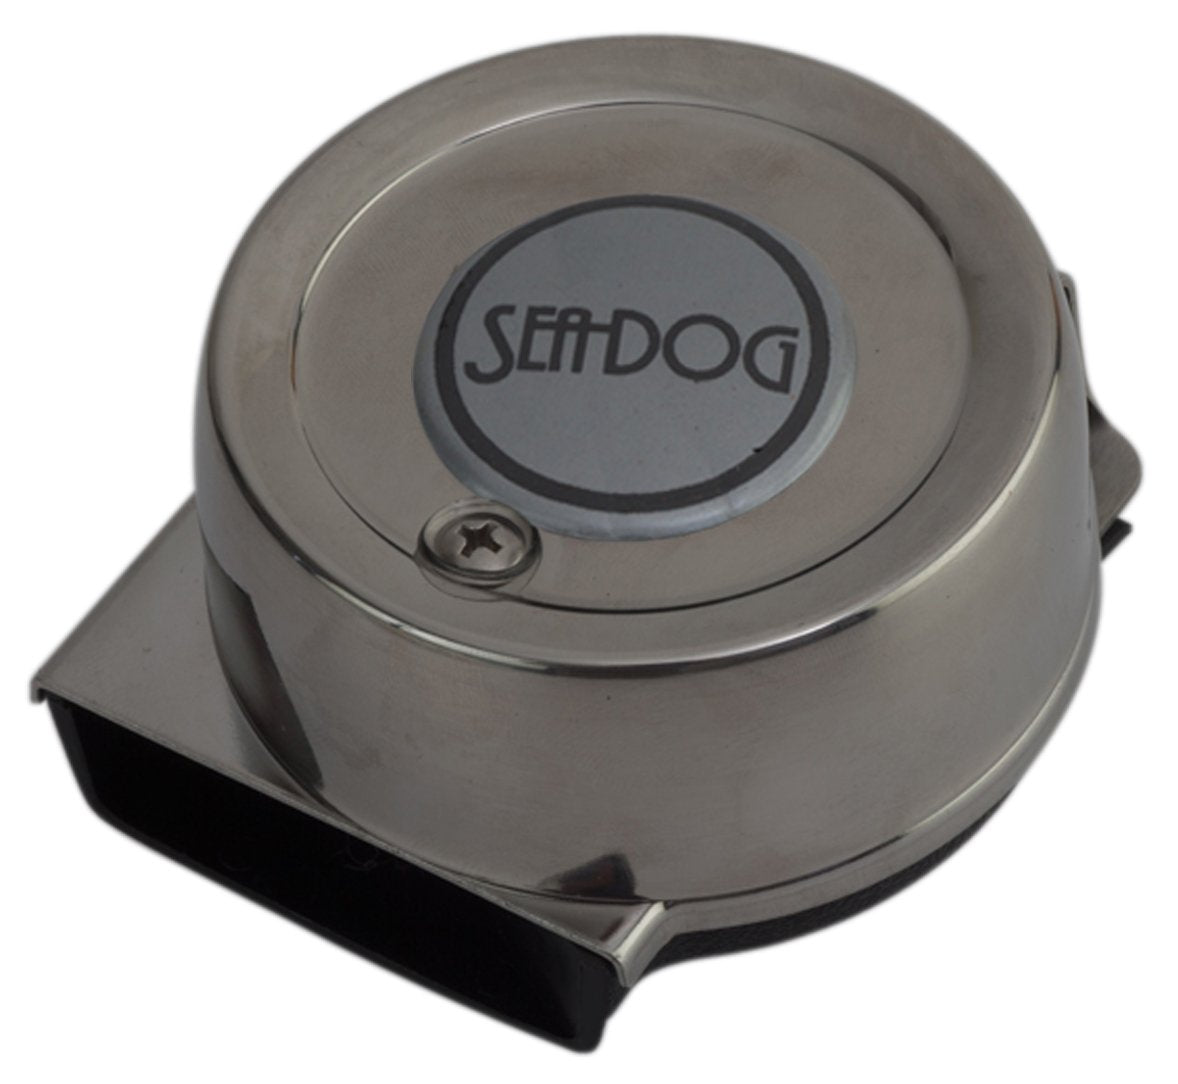 Seadog Mini Single Compact Horn 431110-1 | 2024